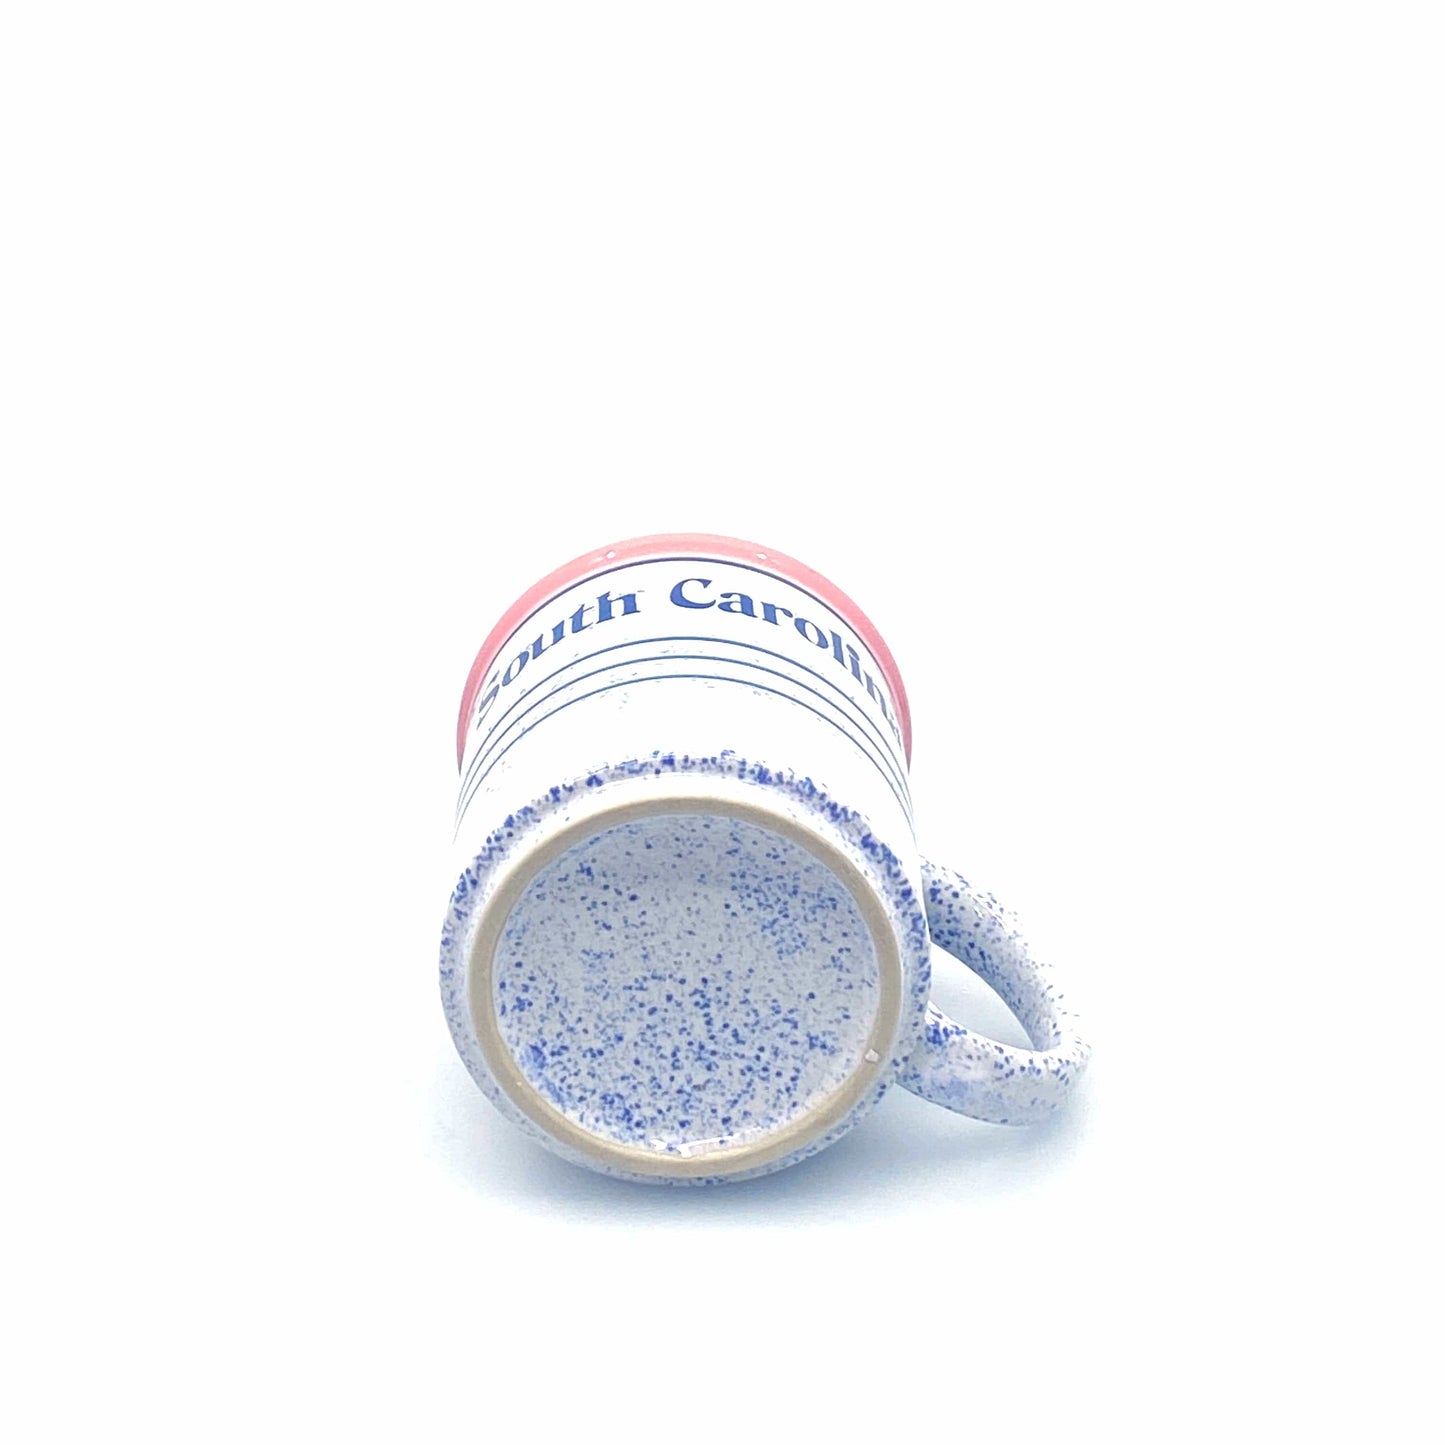 Travel Souvenir South Carolina Blue White Pink Stoneware Coffee Mug Cup